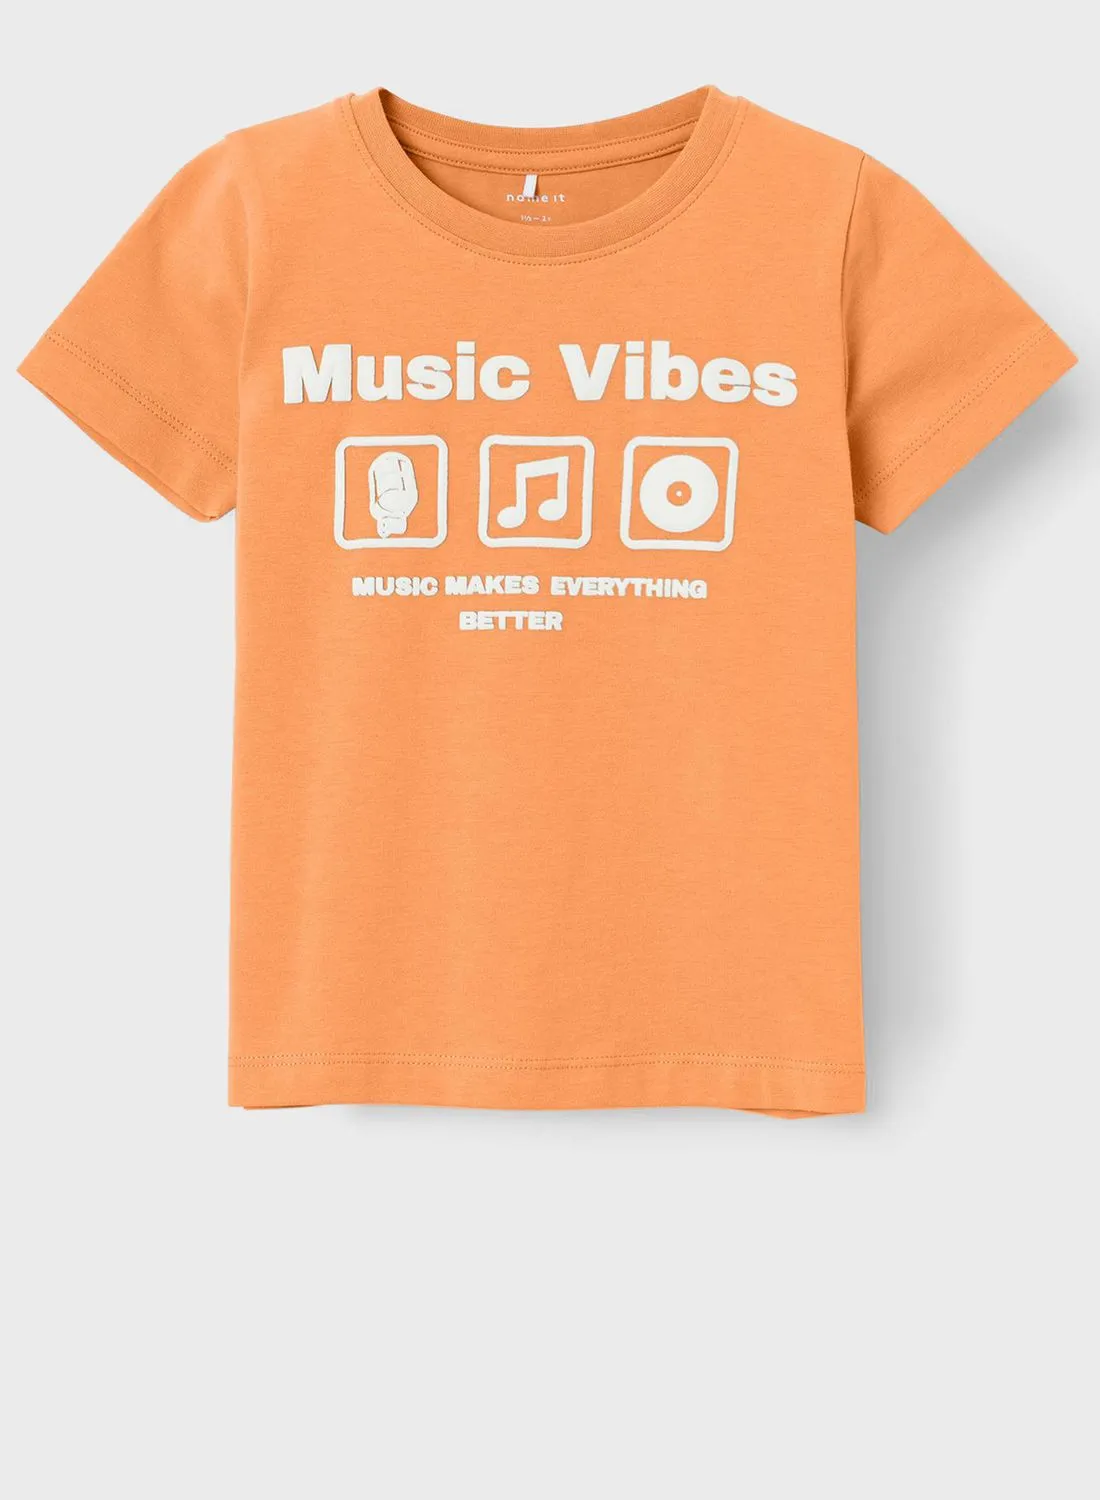 NAME IT Kids Music Vibes Crew Neck T-Shirt